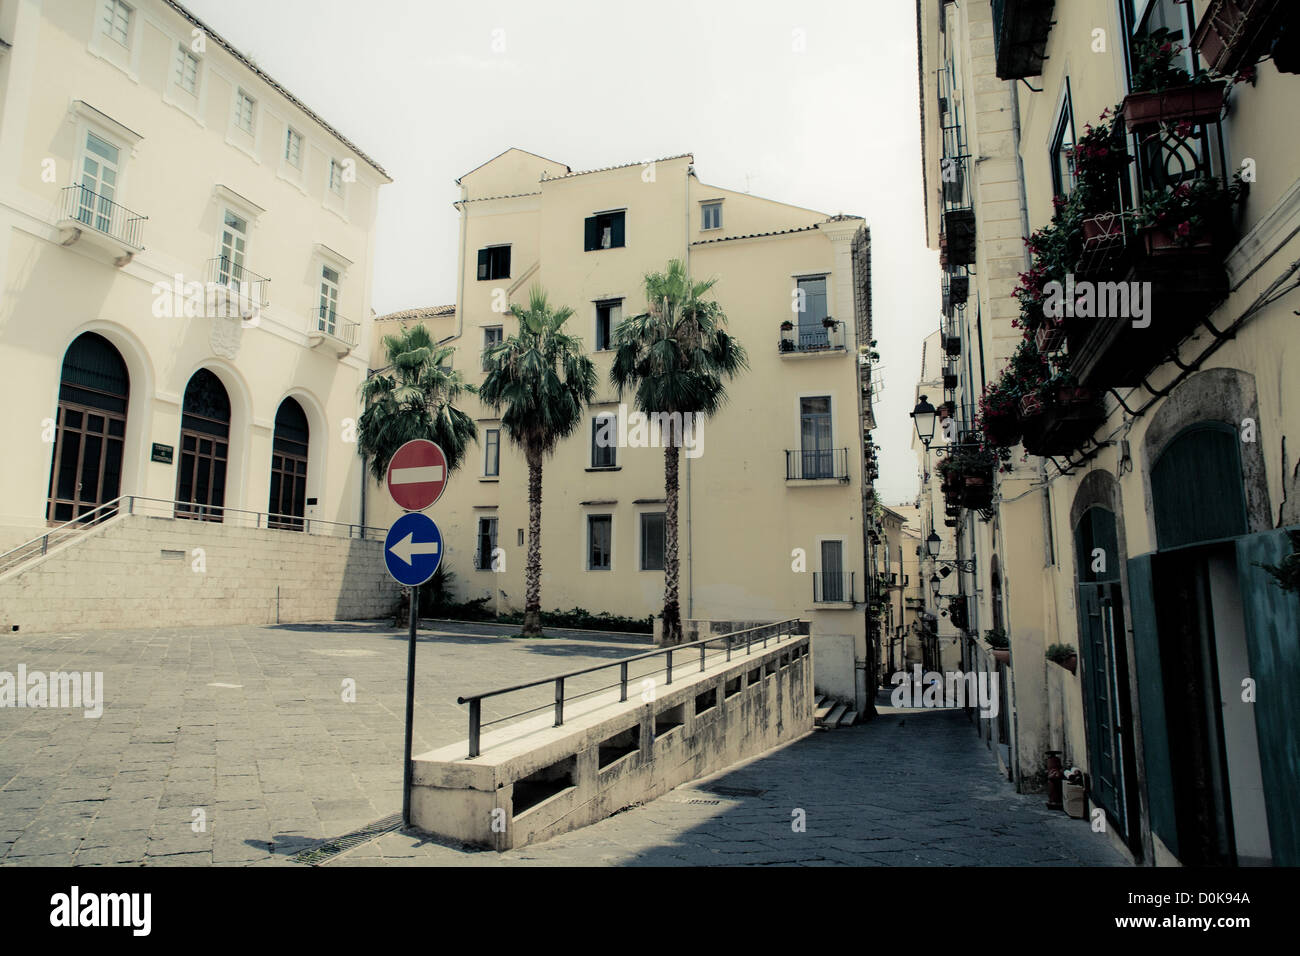 Salerno, Italia, verano, Europa, verano europeo, calles, urbana, la ciudad, la historia Foto de stock